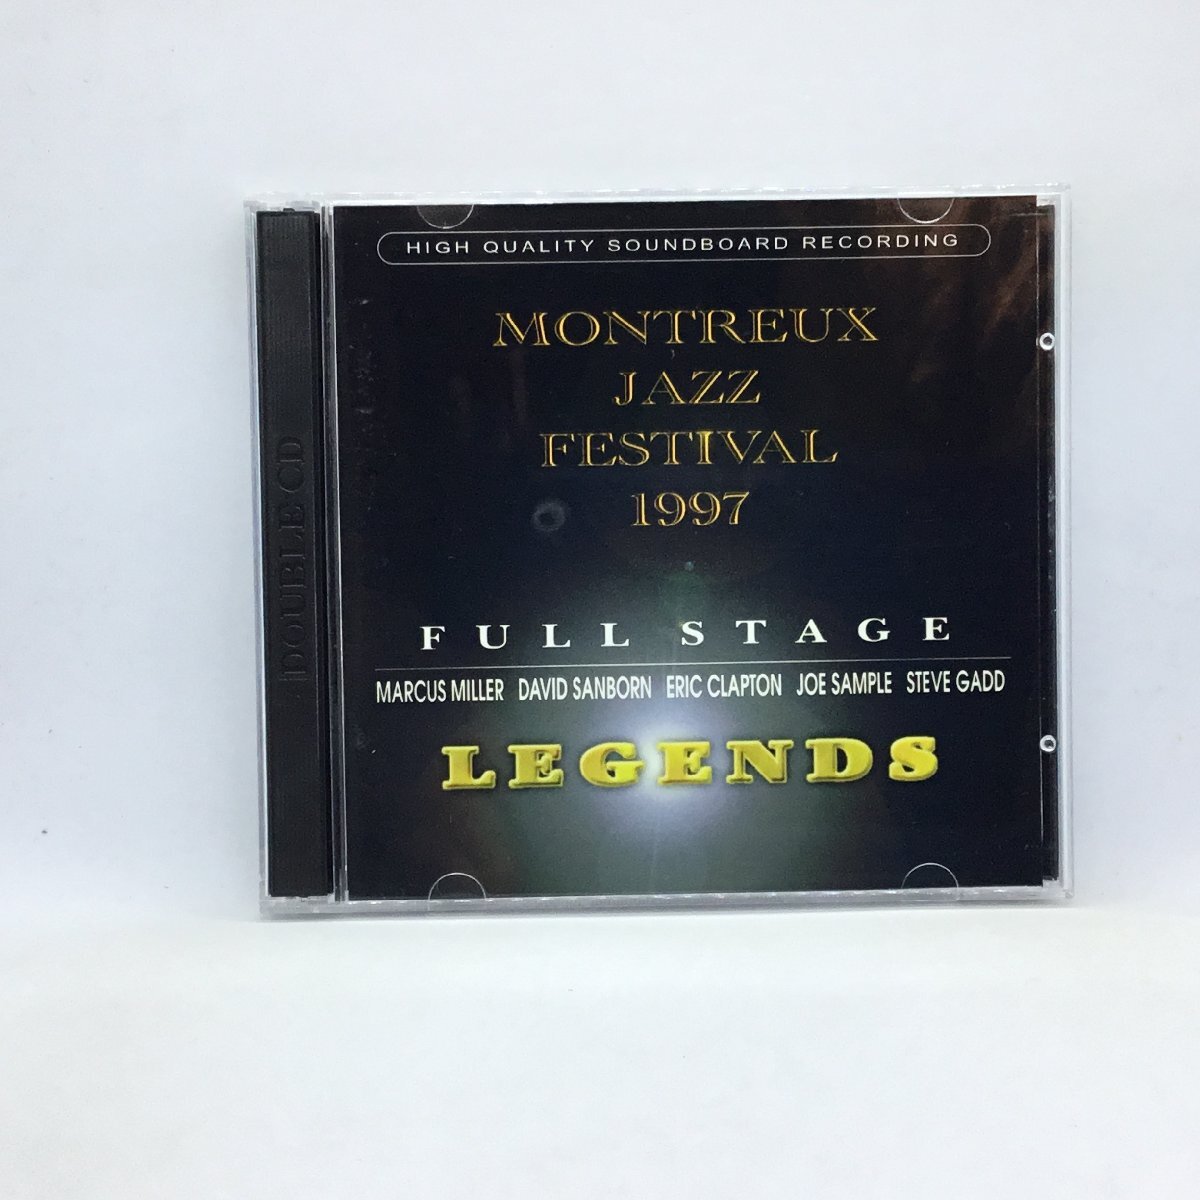 CD-R ◇ V.A. / MONTREUX JAZZ FESTIVAL 1997 FULL STAGE LEGENDS (2CR-R) MARCUS MILLER DAVID SANBORN ERIC CLAPTON JOE SAMPLE_画像1